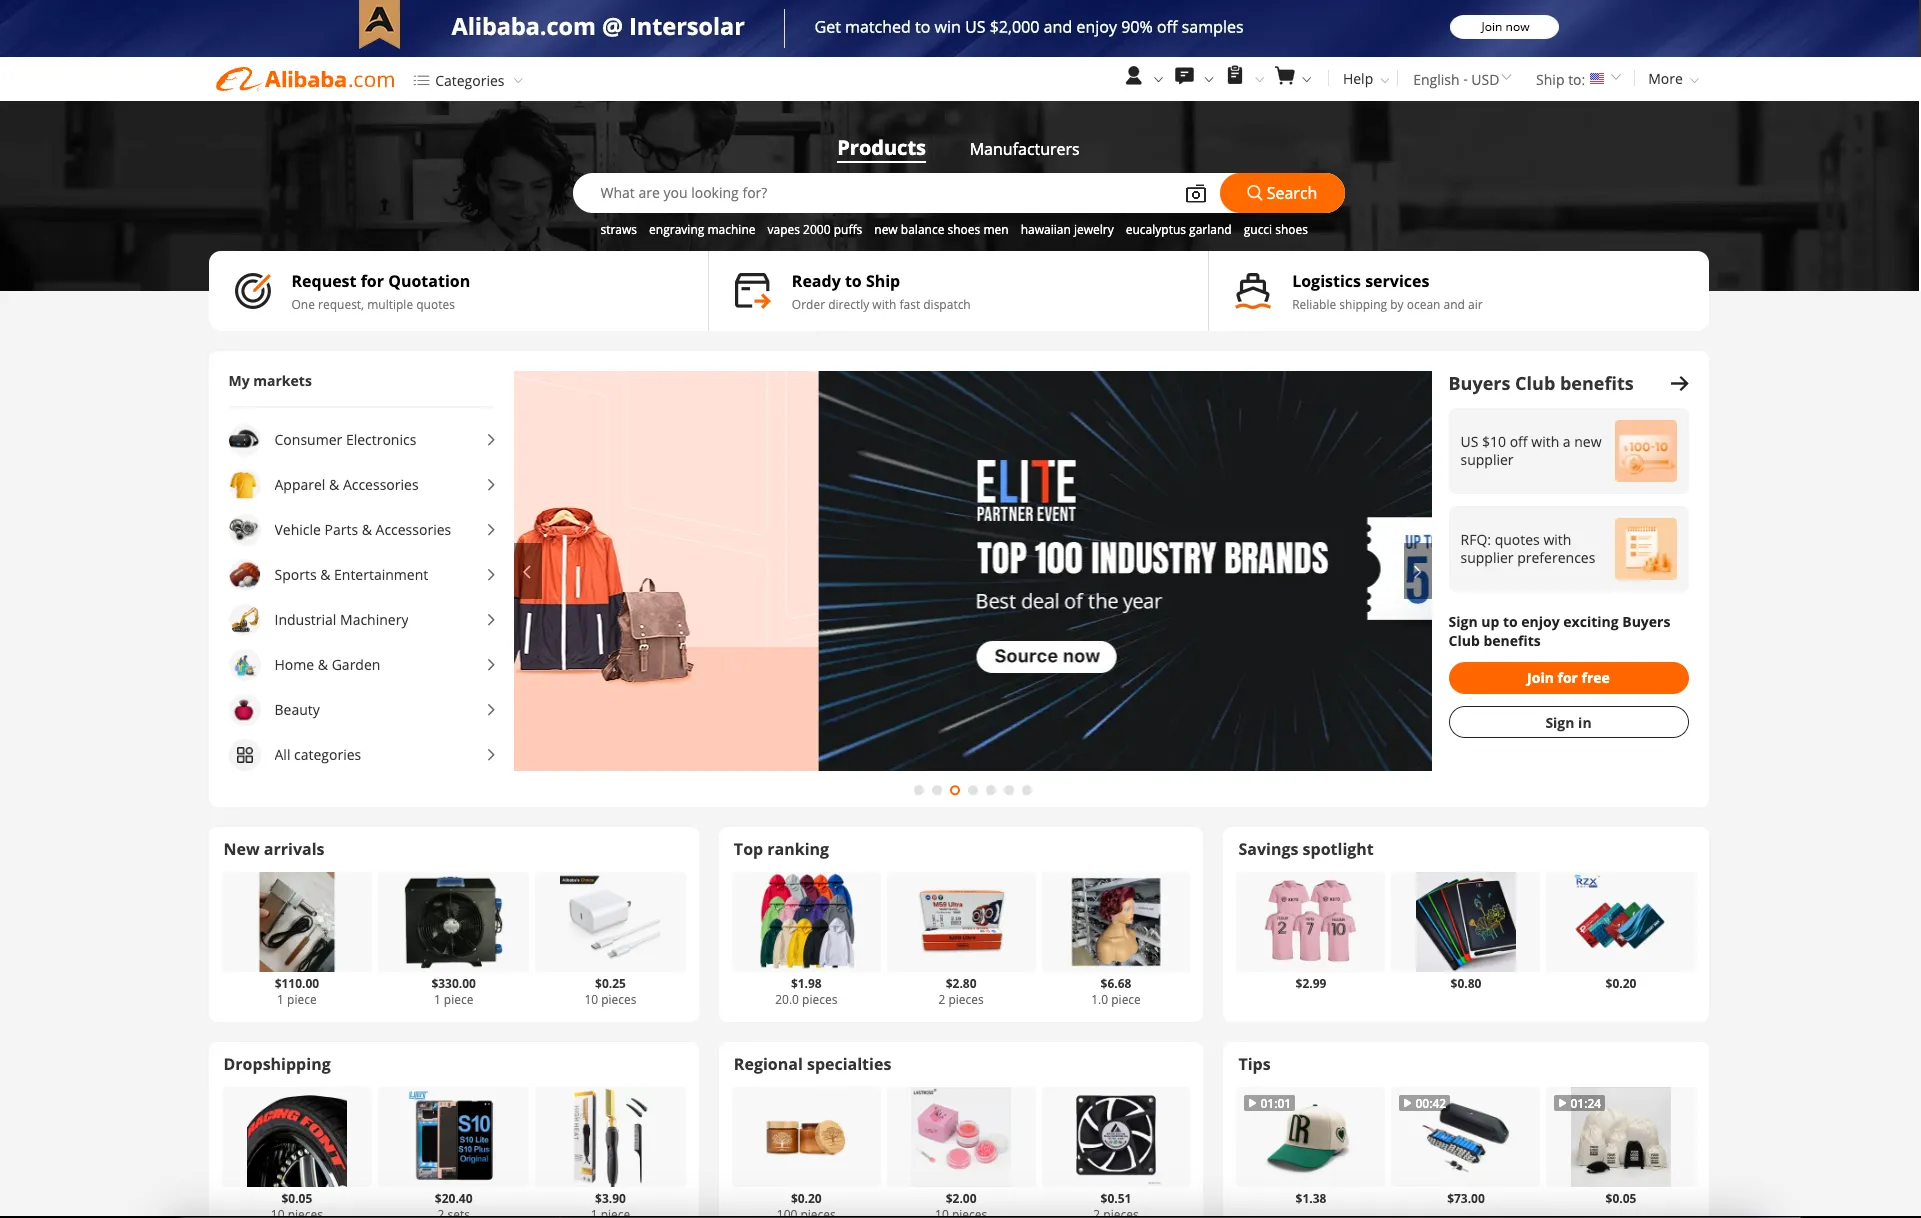  Alibaba.com website